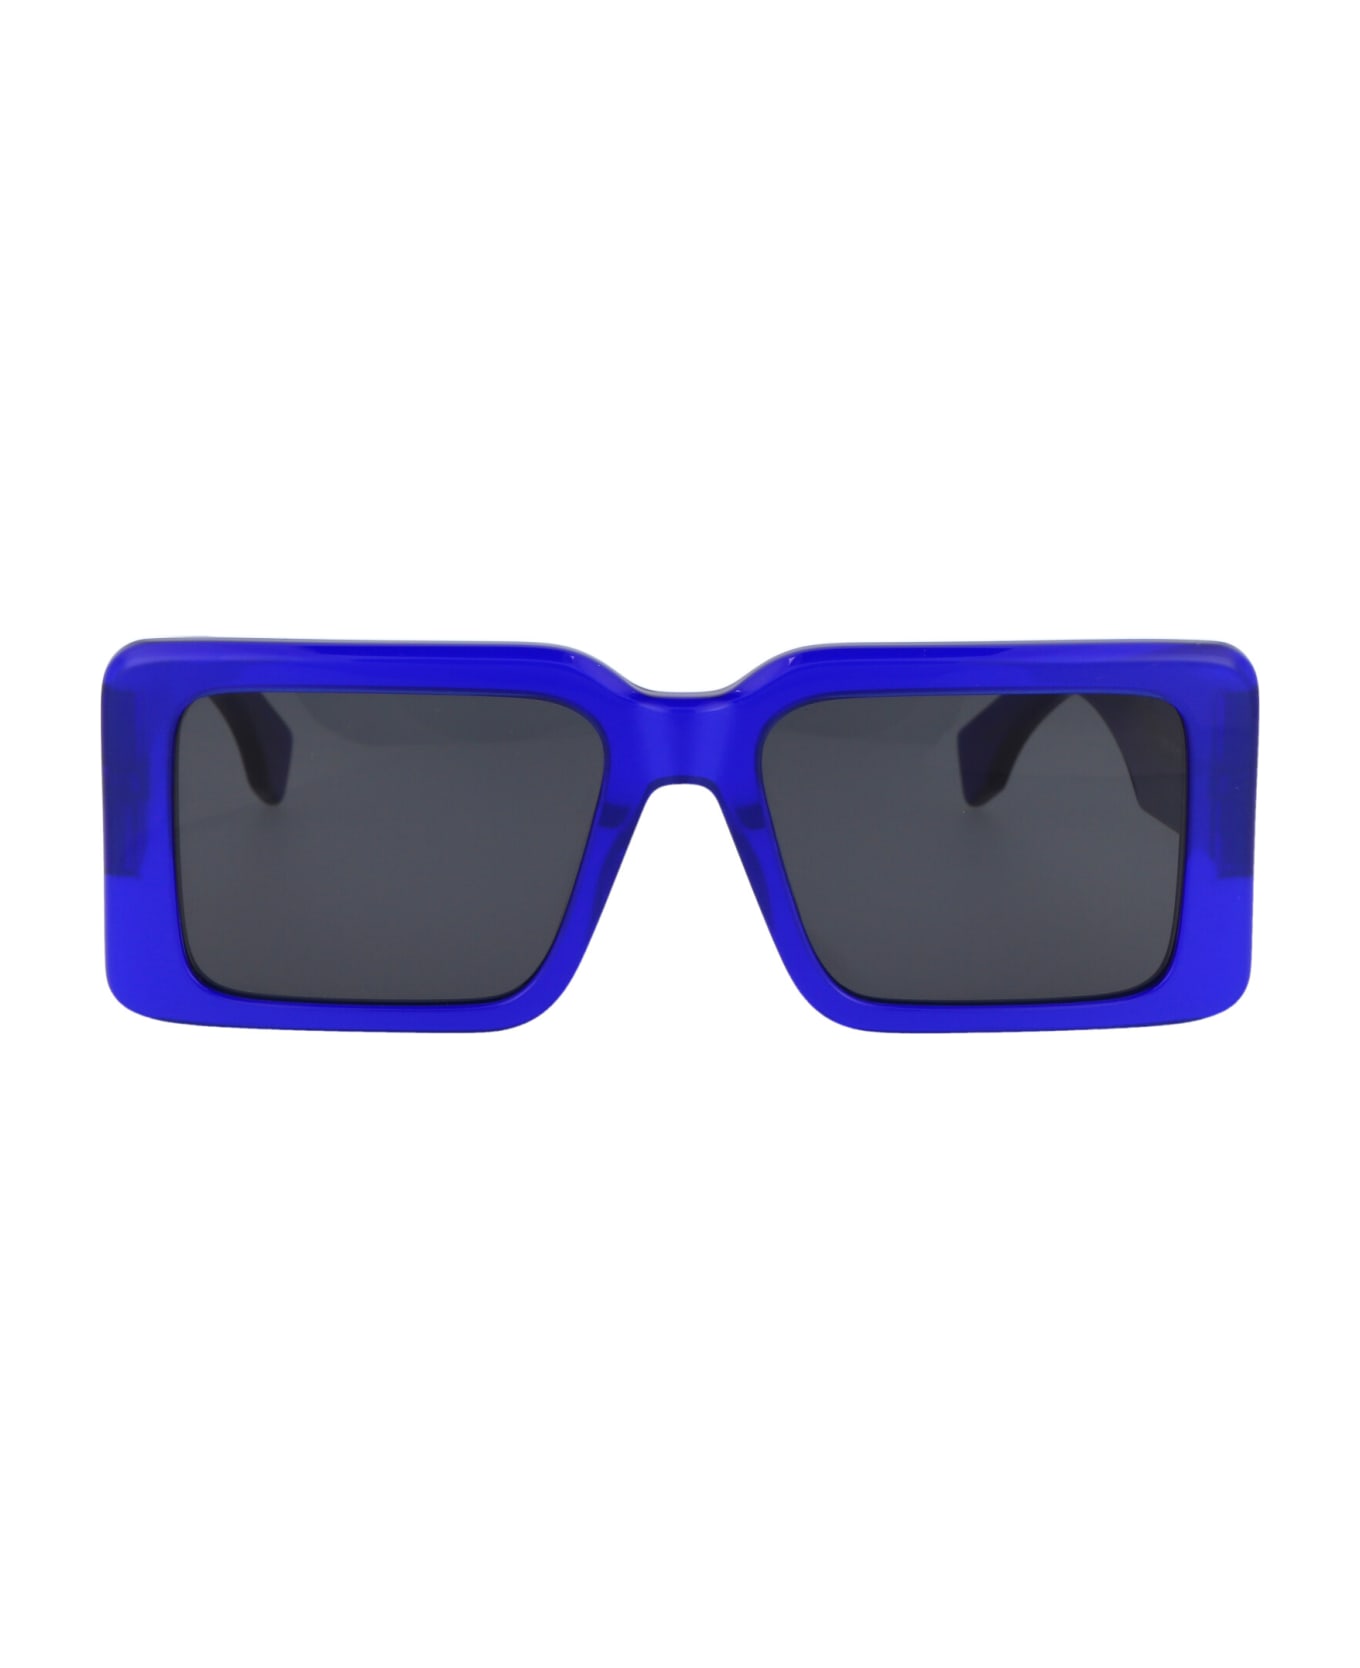 Marcelo Burlon Sicomoro Sunglasses - 4507 BLUE